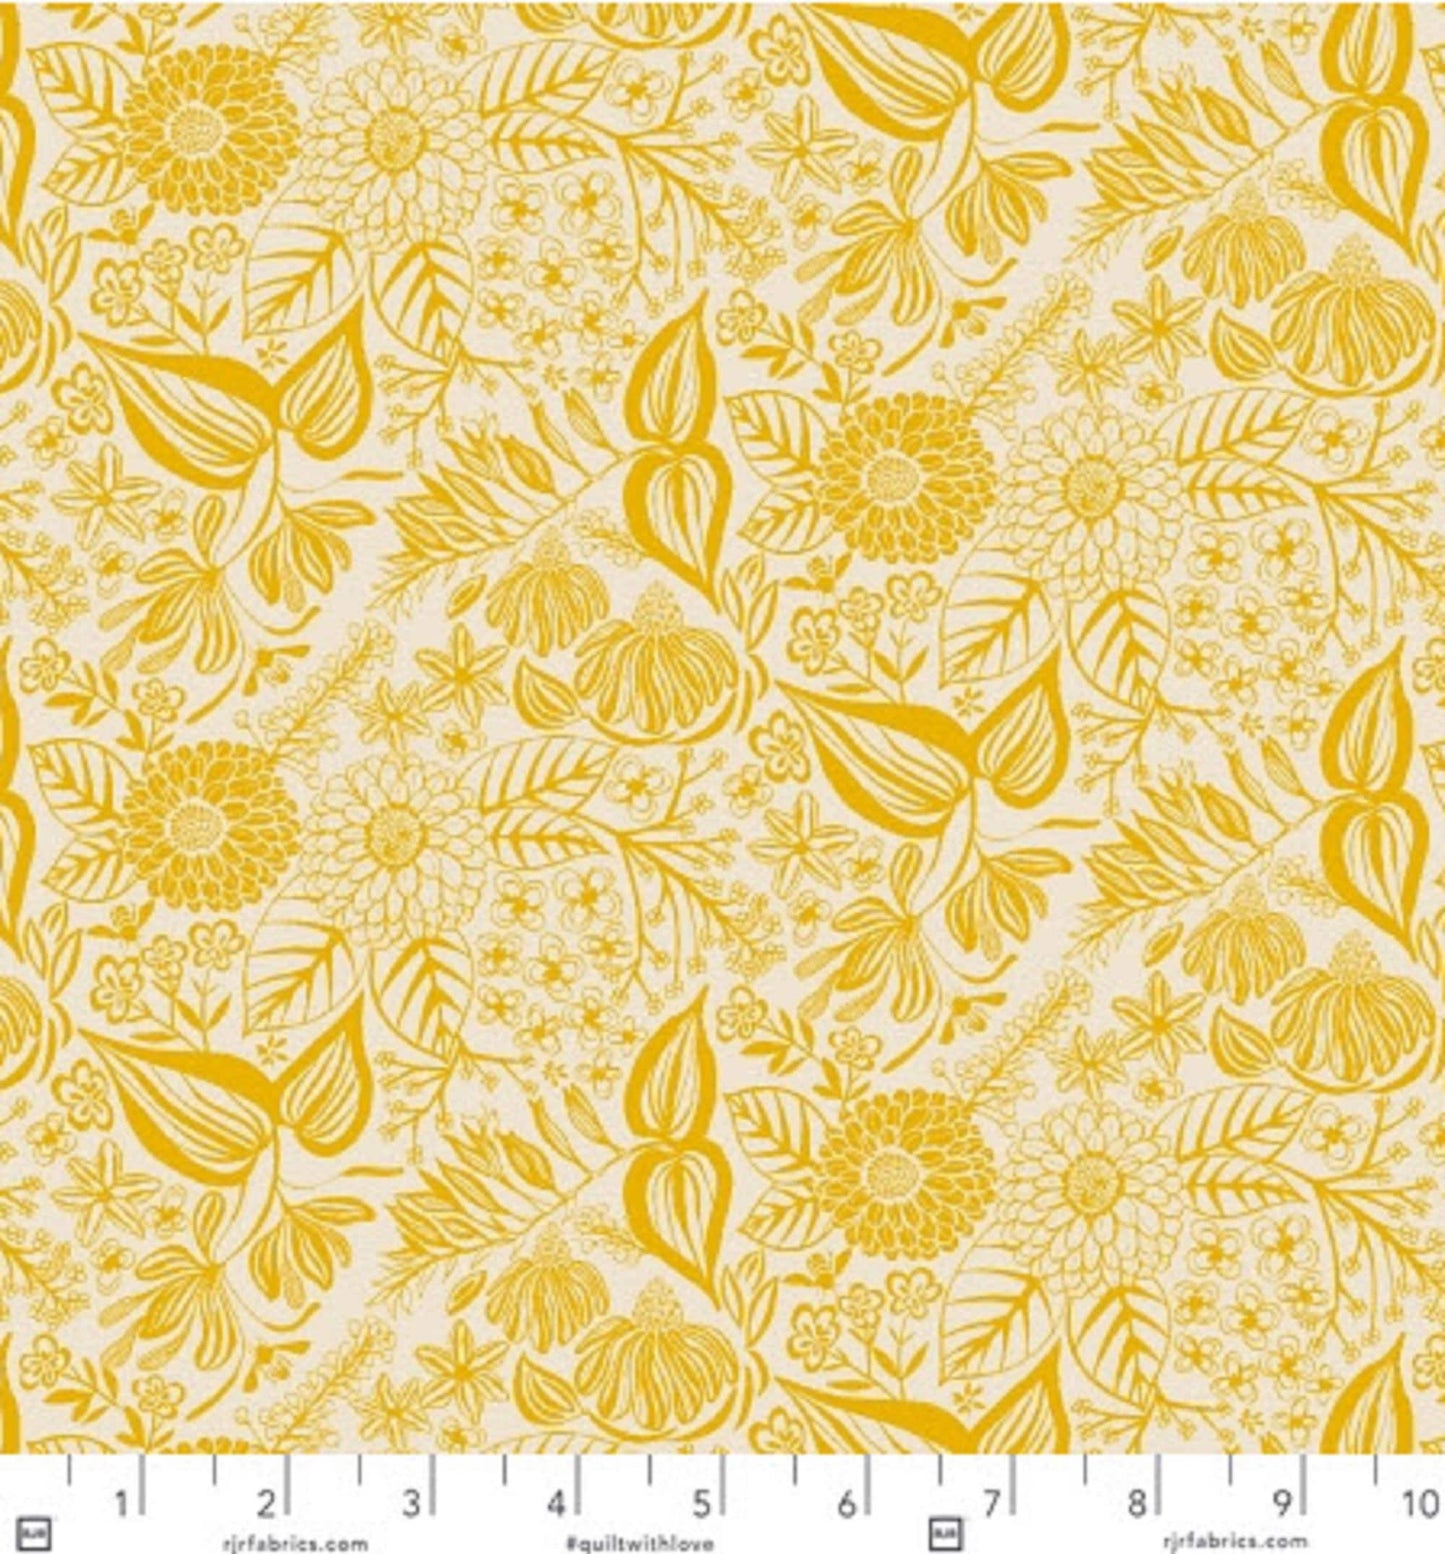 Bee Garden Sunshine Honeybee Garden Elizabeth Halpern RJR Fabrics Quilters Cotton Fabric Fetish